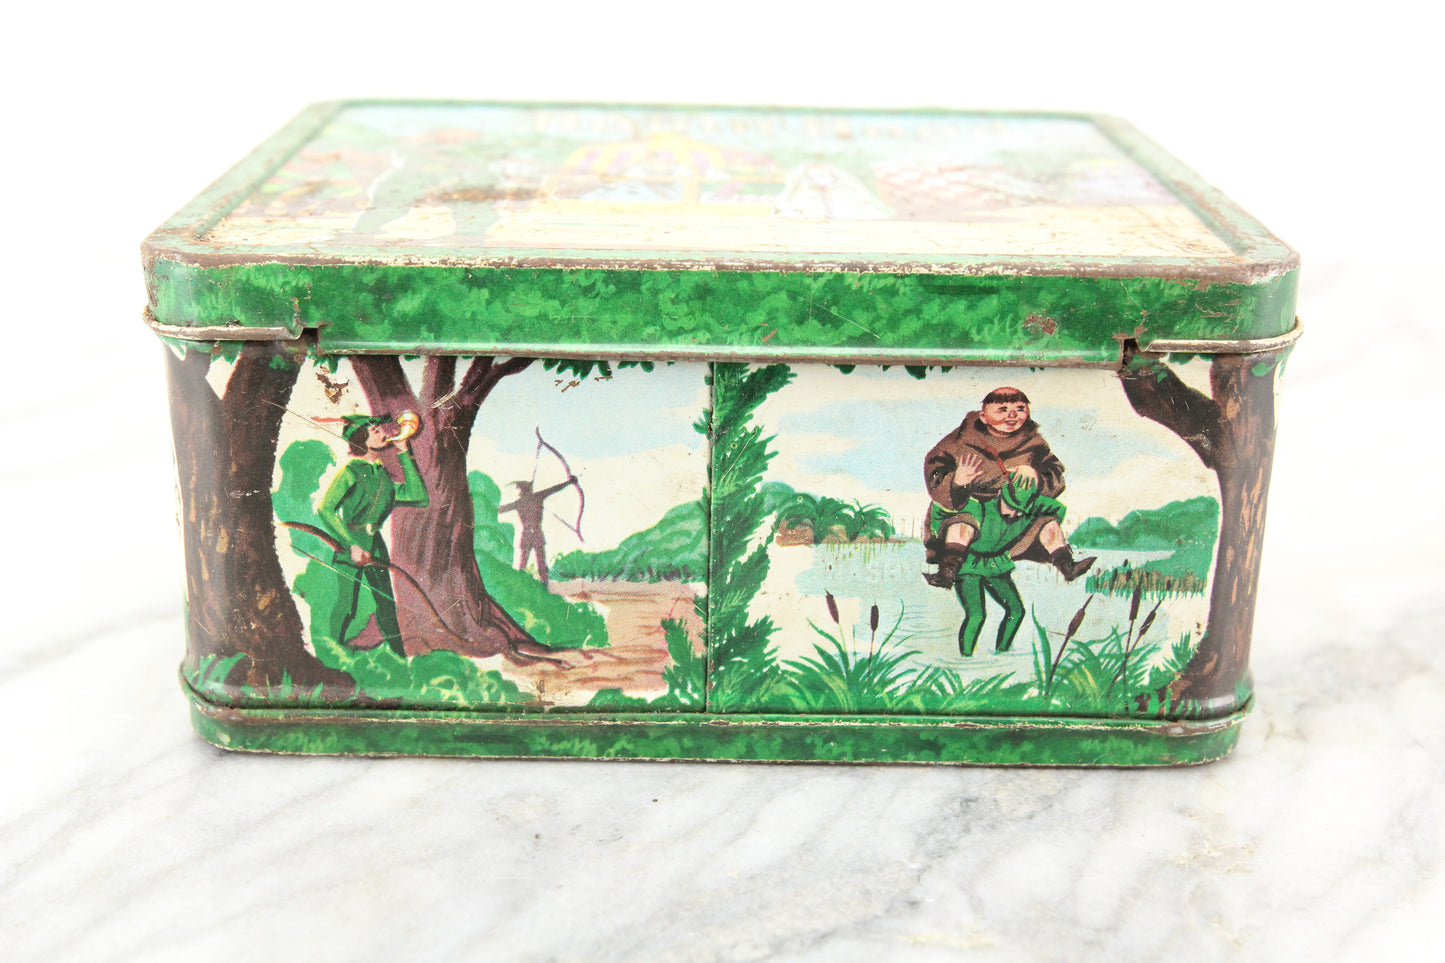 Robin Hood Aladdin Brand Metal Lunch Box, 1956